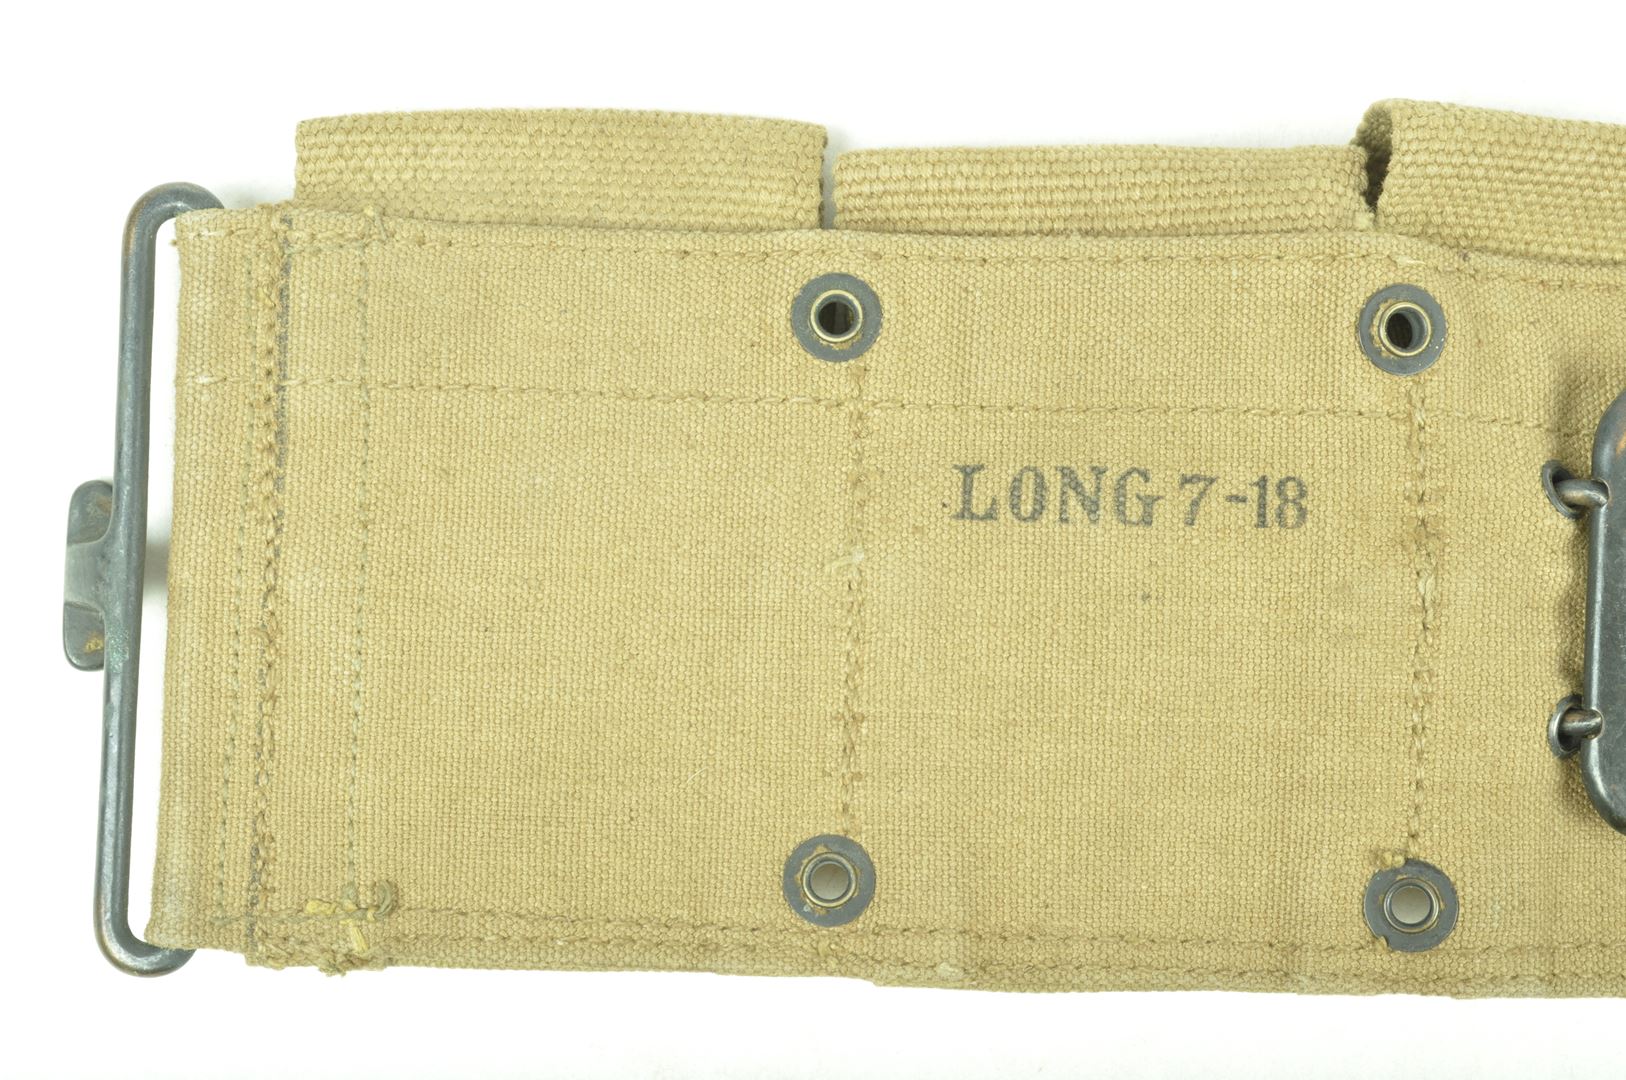 Ceinturon Springfield M-1917 "LONG 18"